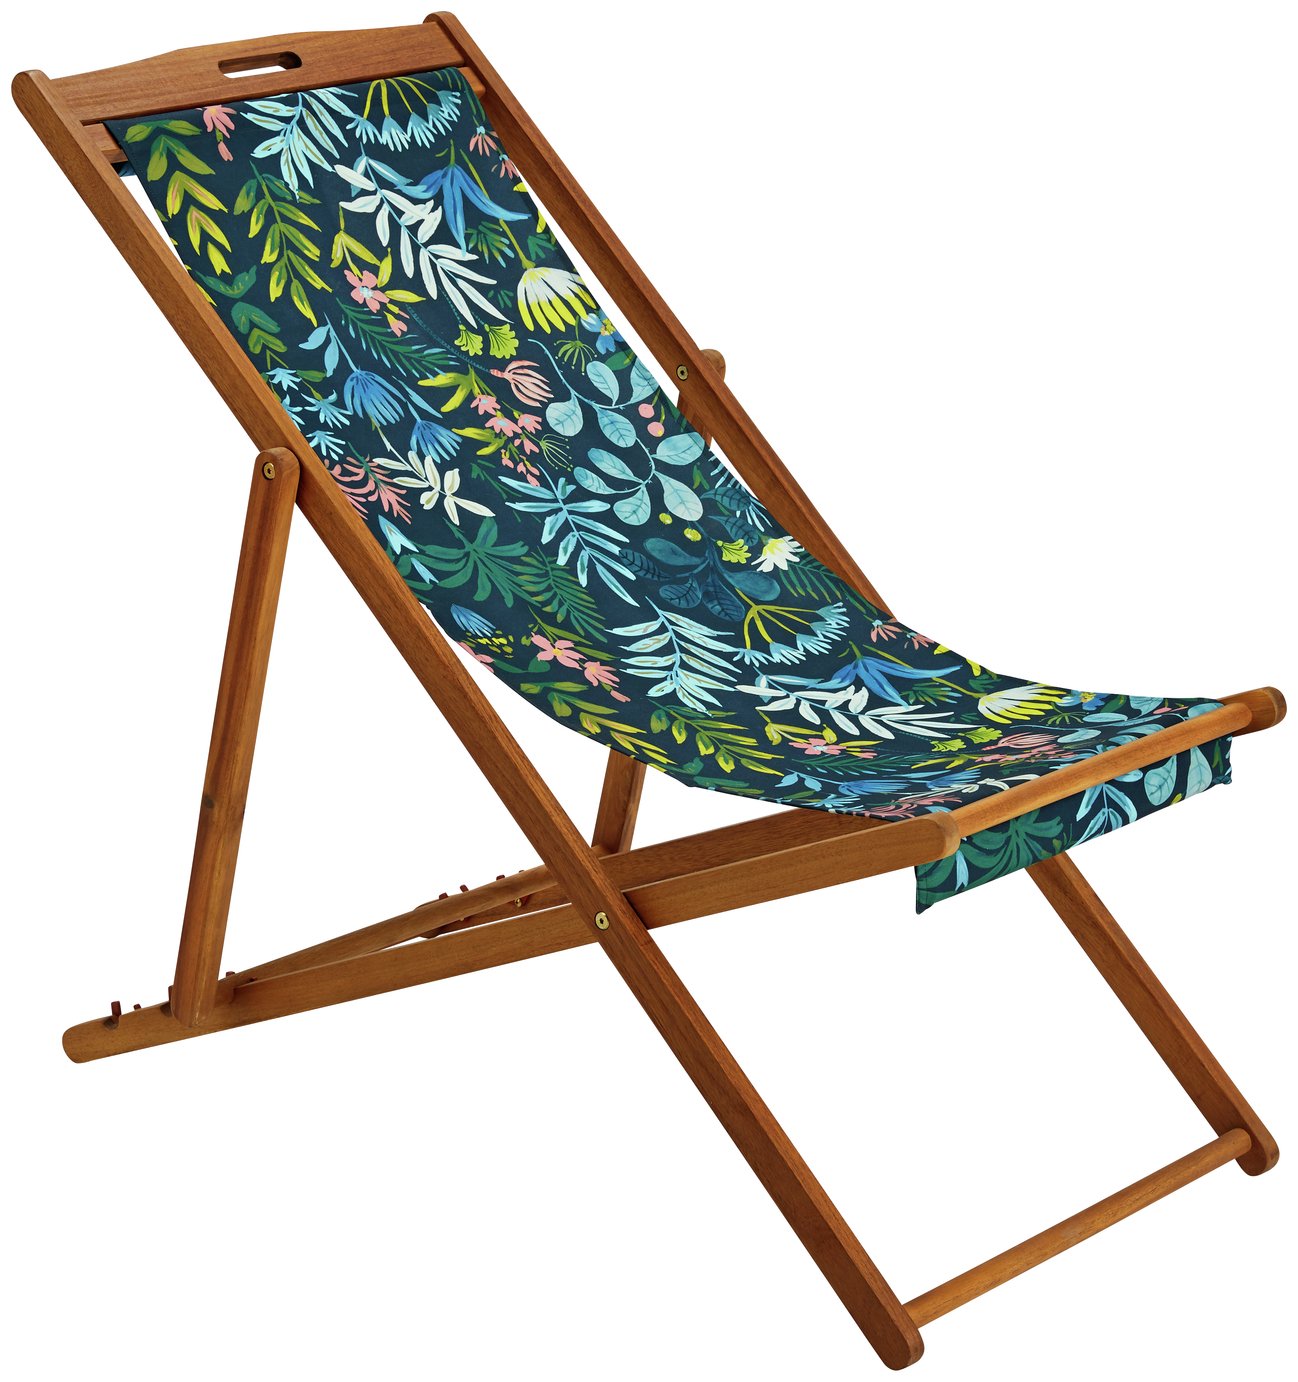 Argos Home Wooden Deck Chair - Rainforest